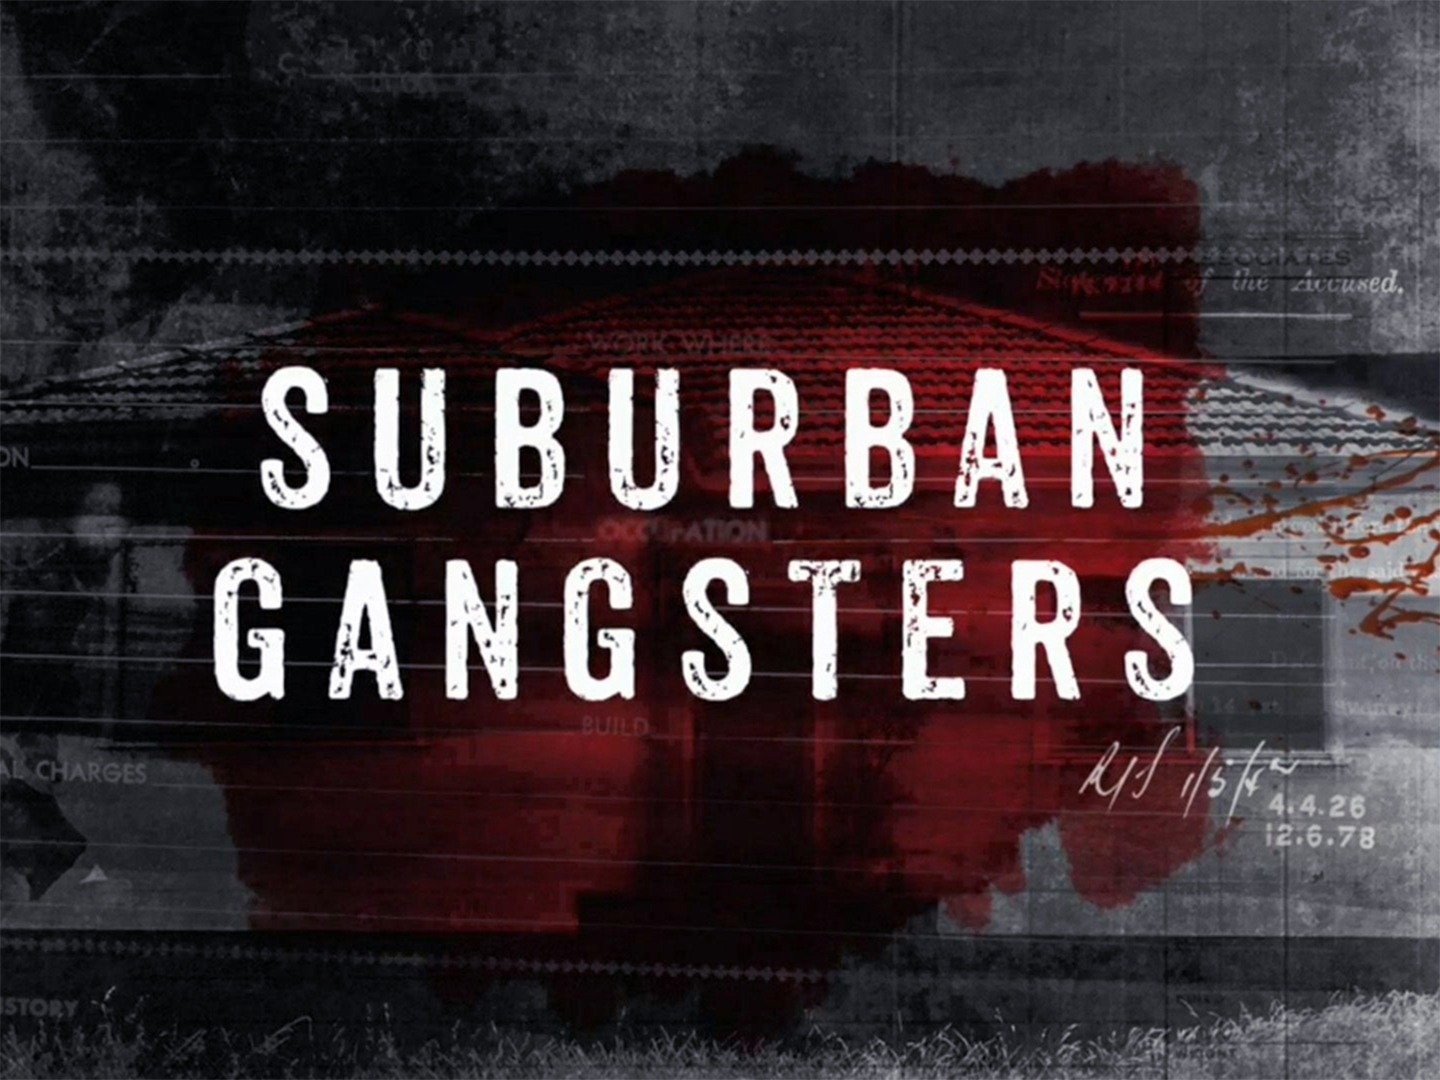 John Carpenter's Suburban Screams: Season 1 Pictures - Rotten Tomatoes